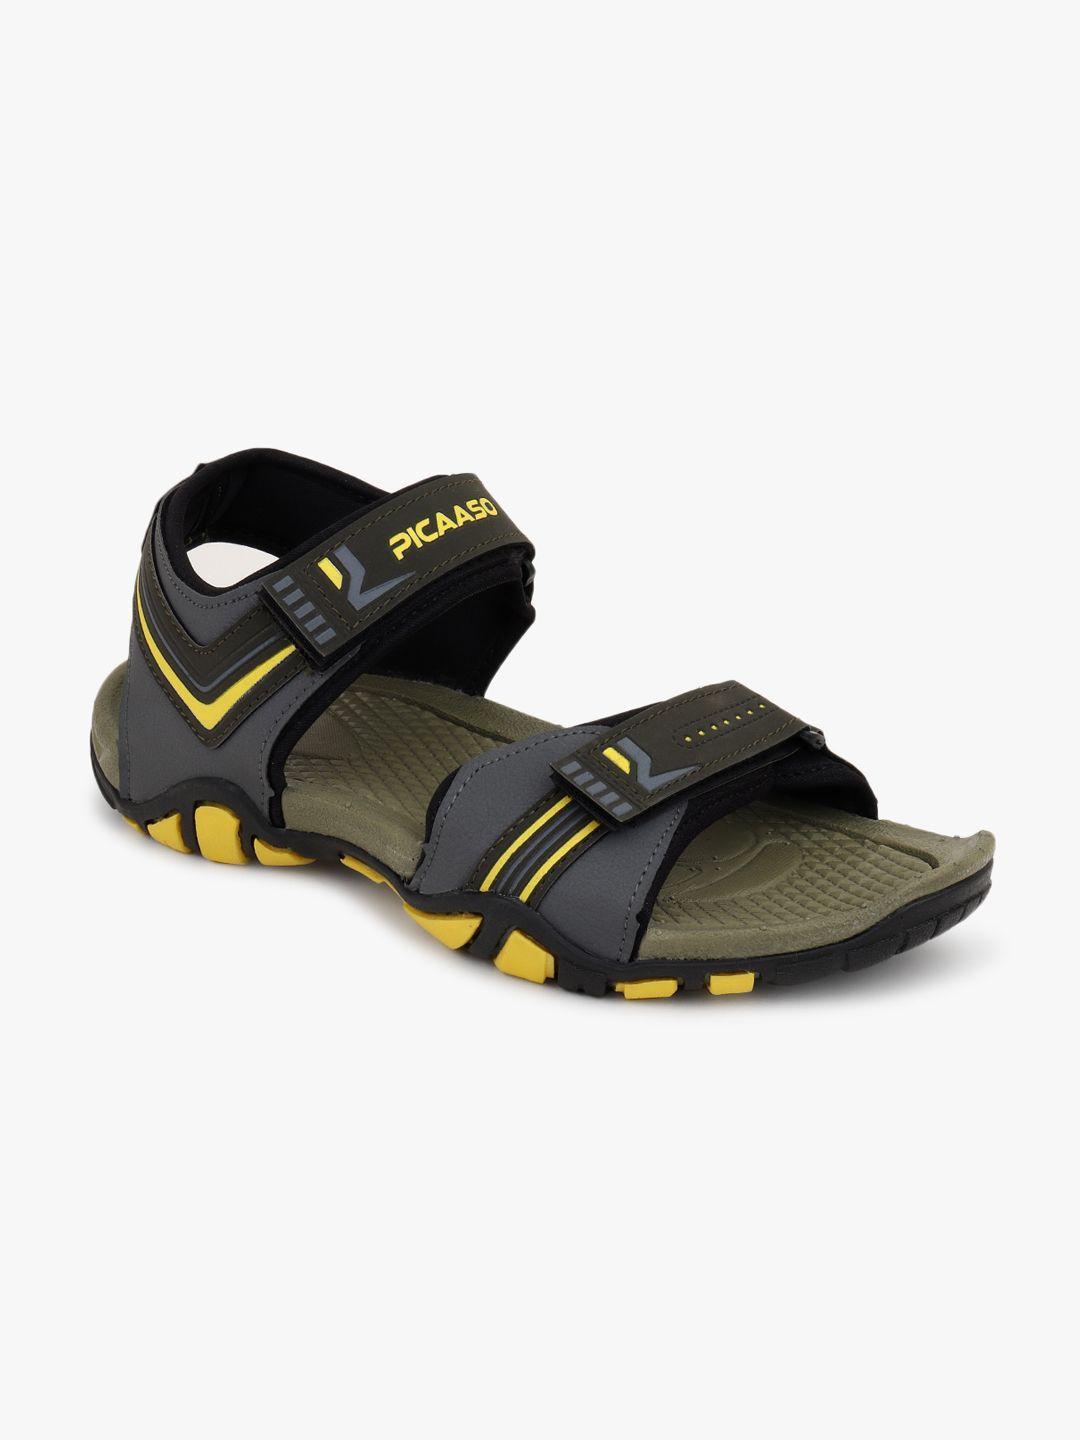 picaaso-men-colourblocked-sports-sandals